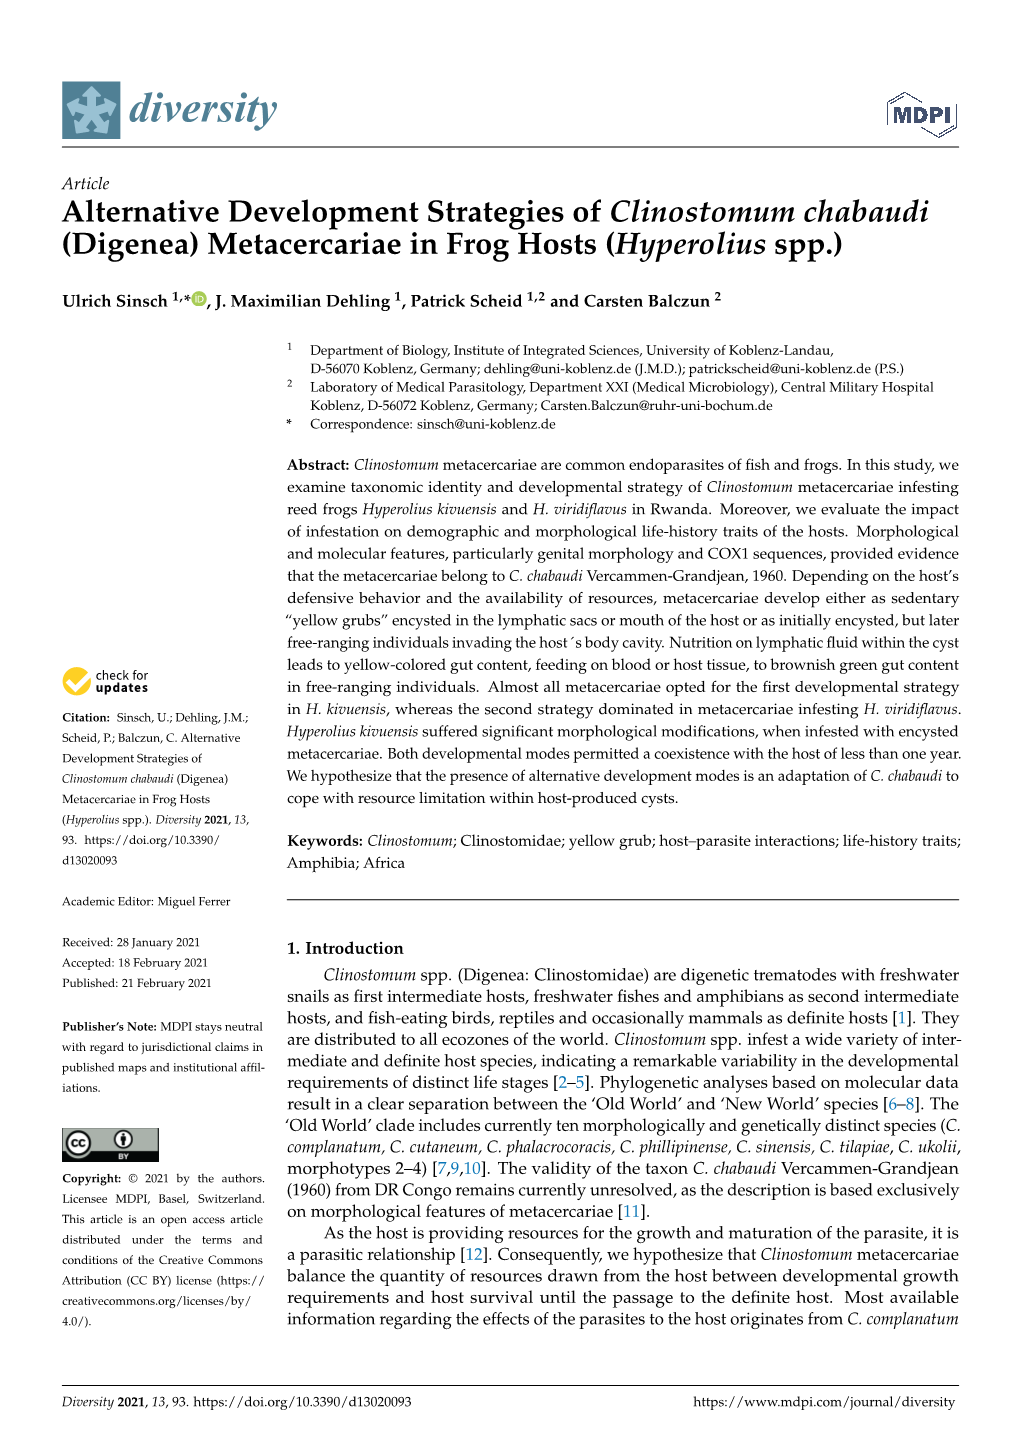 Alternative Development Strategies of Clinostomum Chabaudi (Digenea) Metacercariae in Frog Hosts (Hyperolius Spp.)